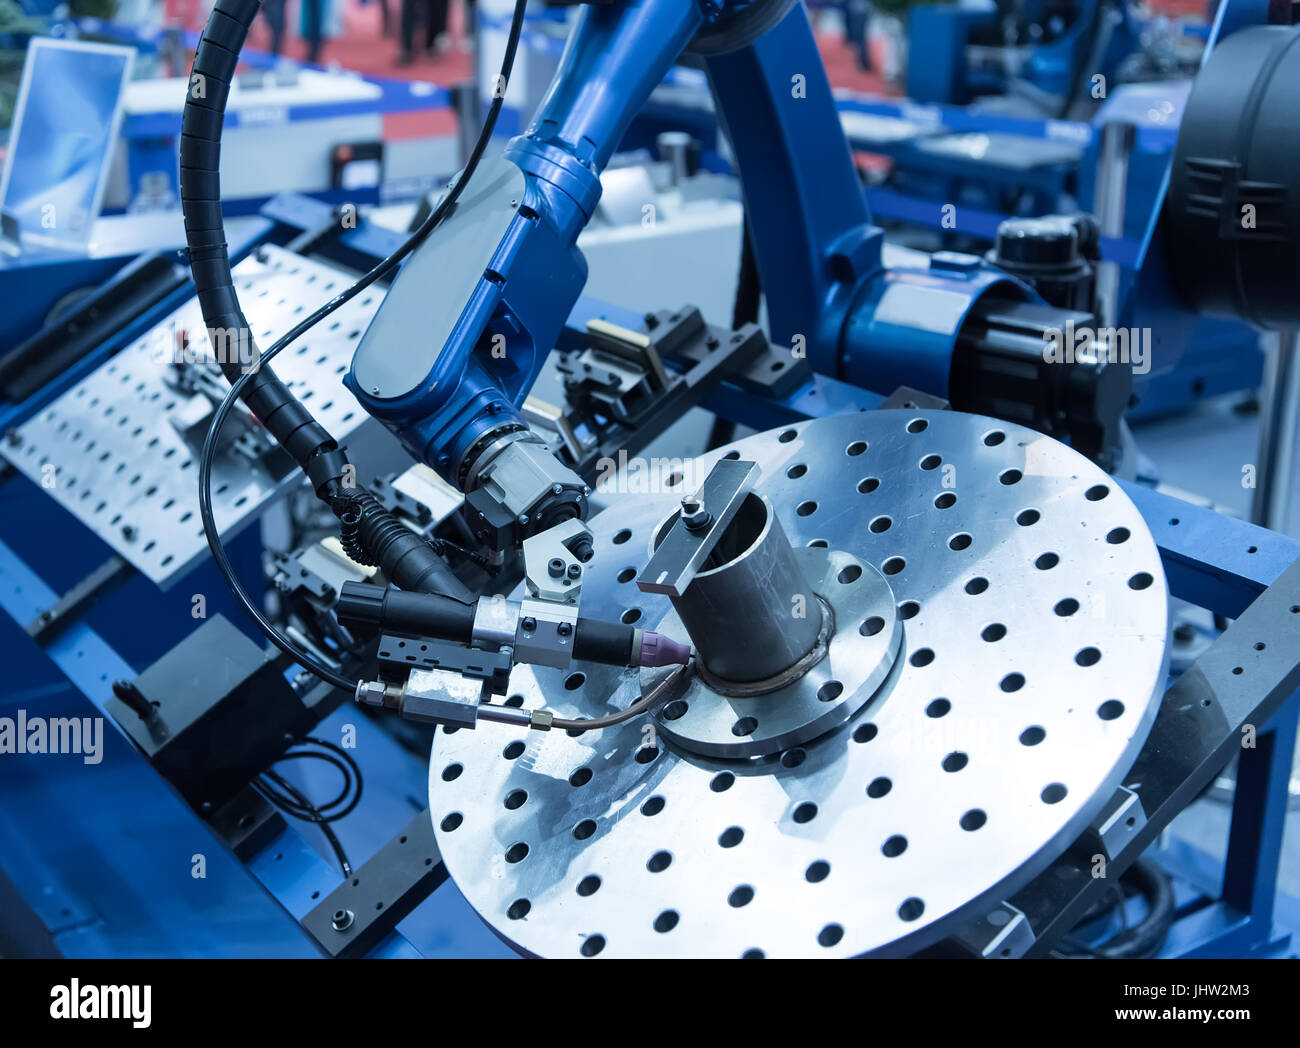 Industrial robotic arm for welding. Stock Photo